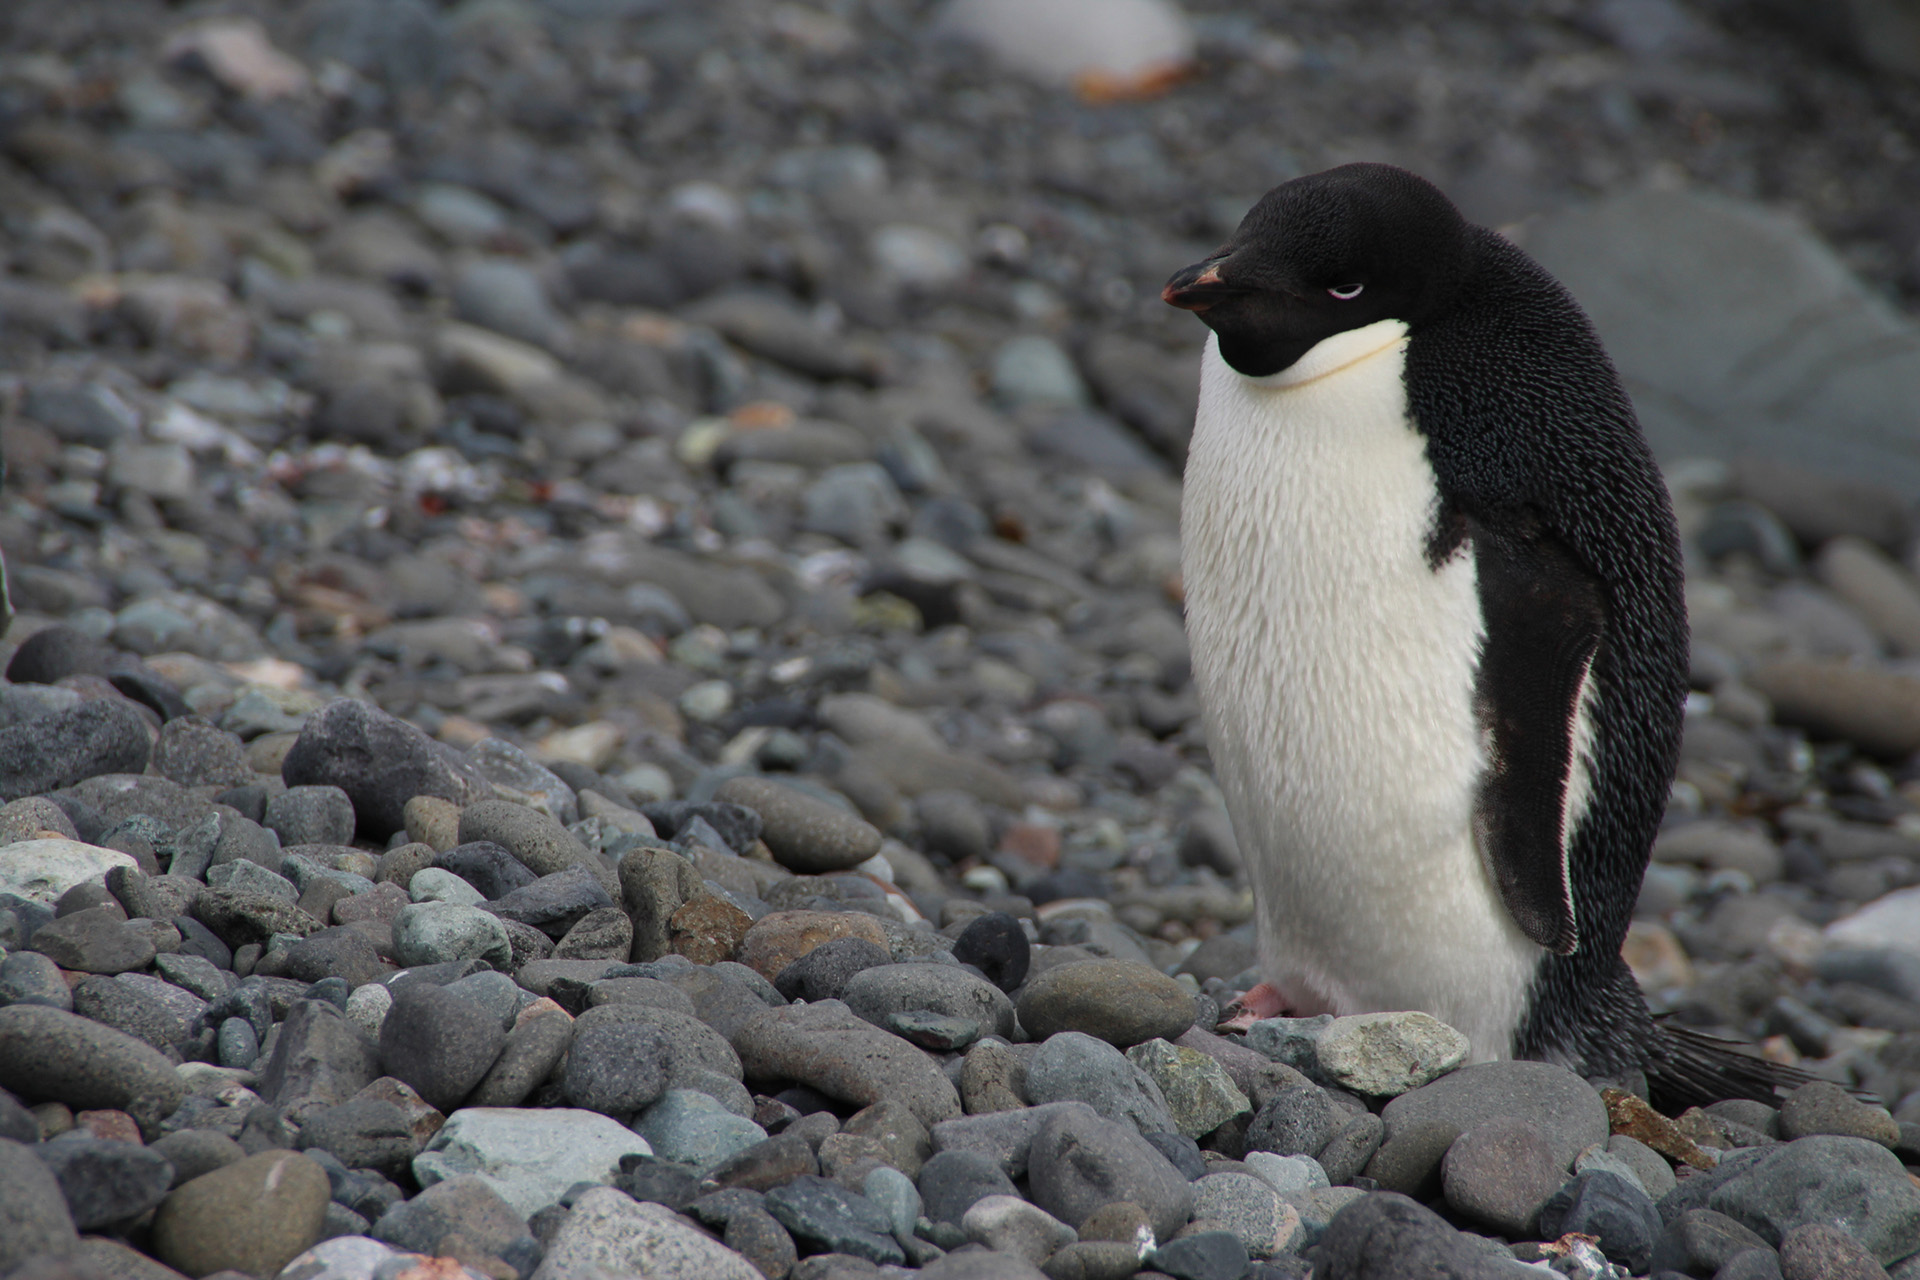 A penguin looking pretty grumpy